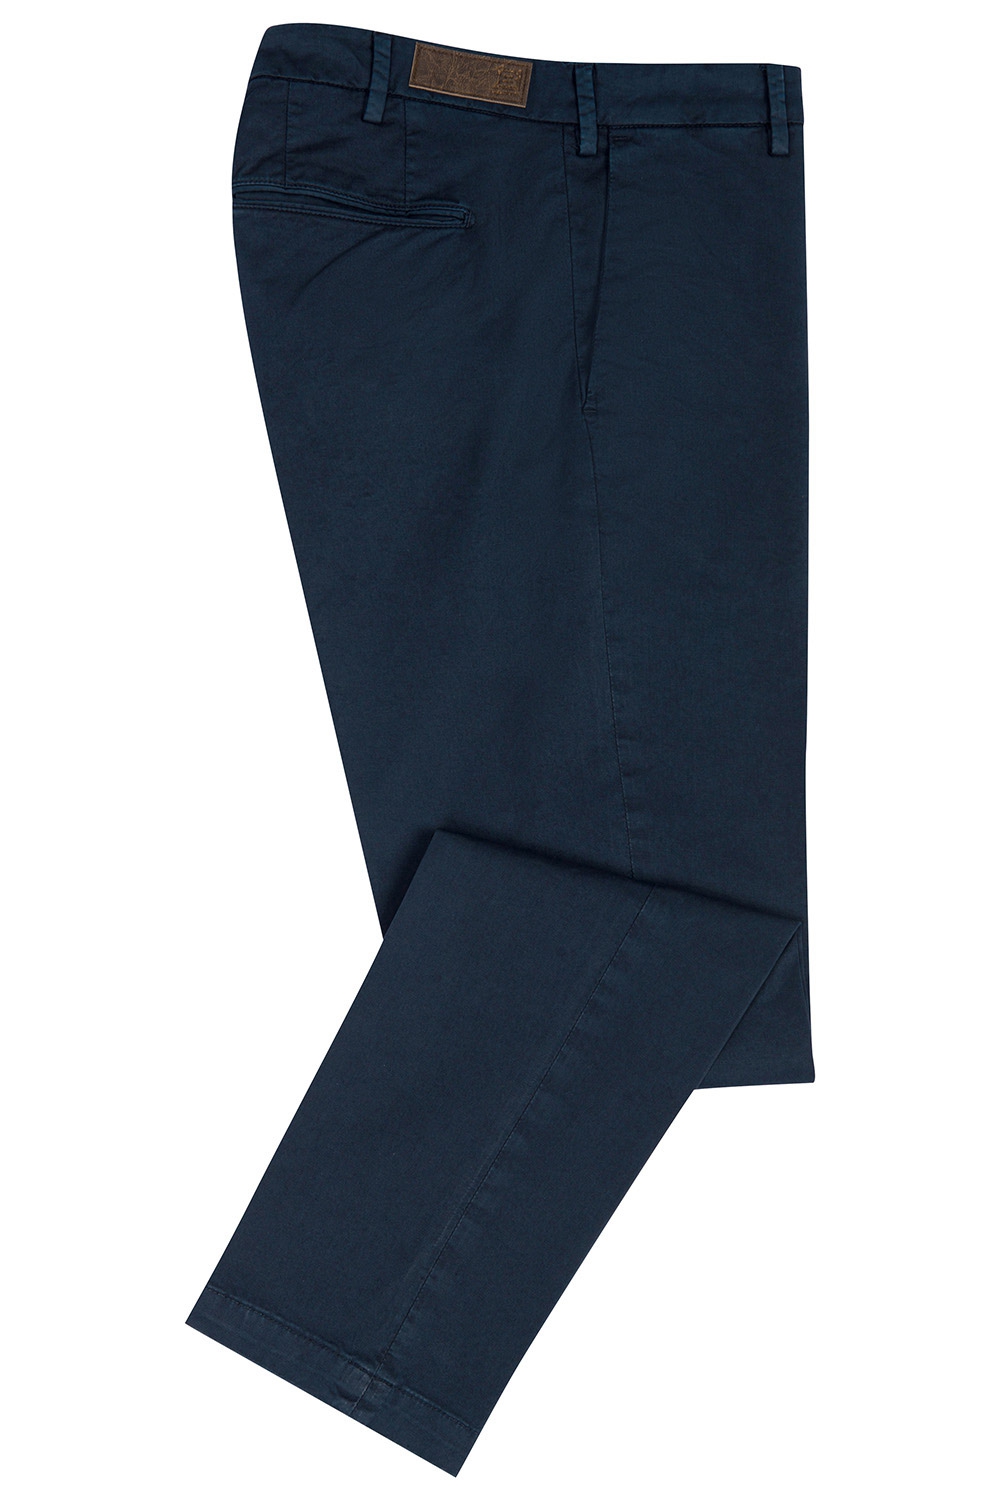 Pantaloni regular bleumarin uni 0